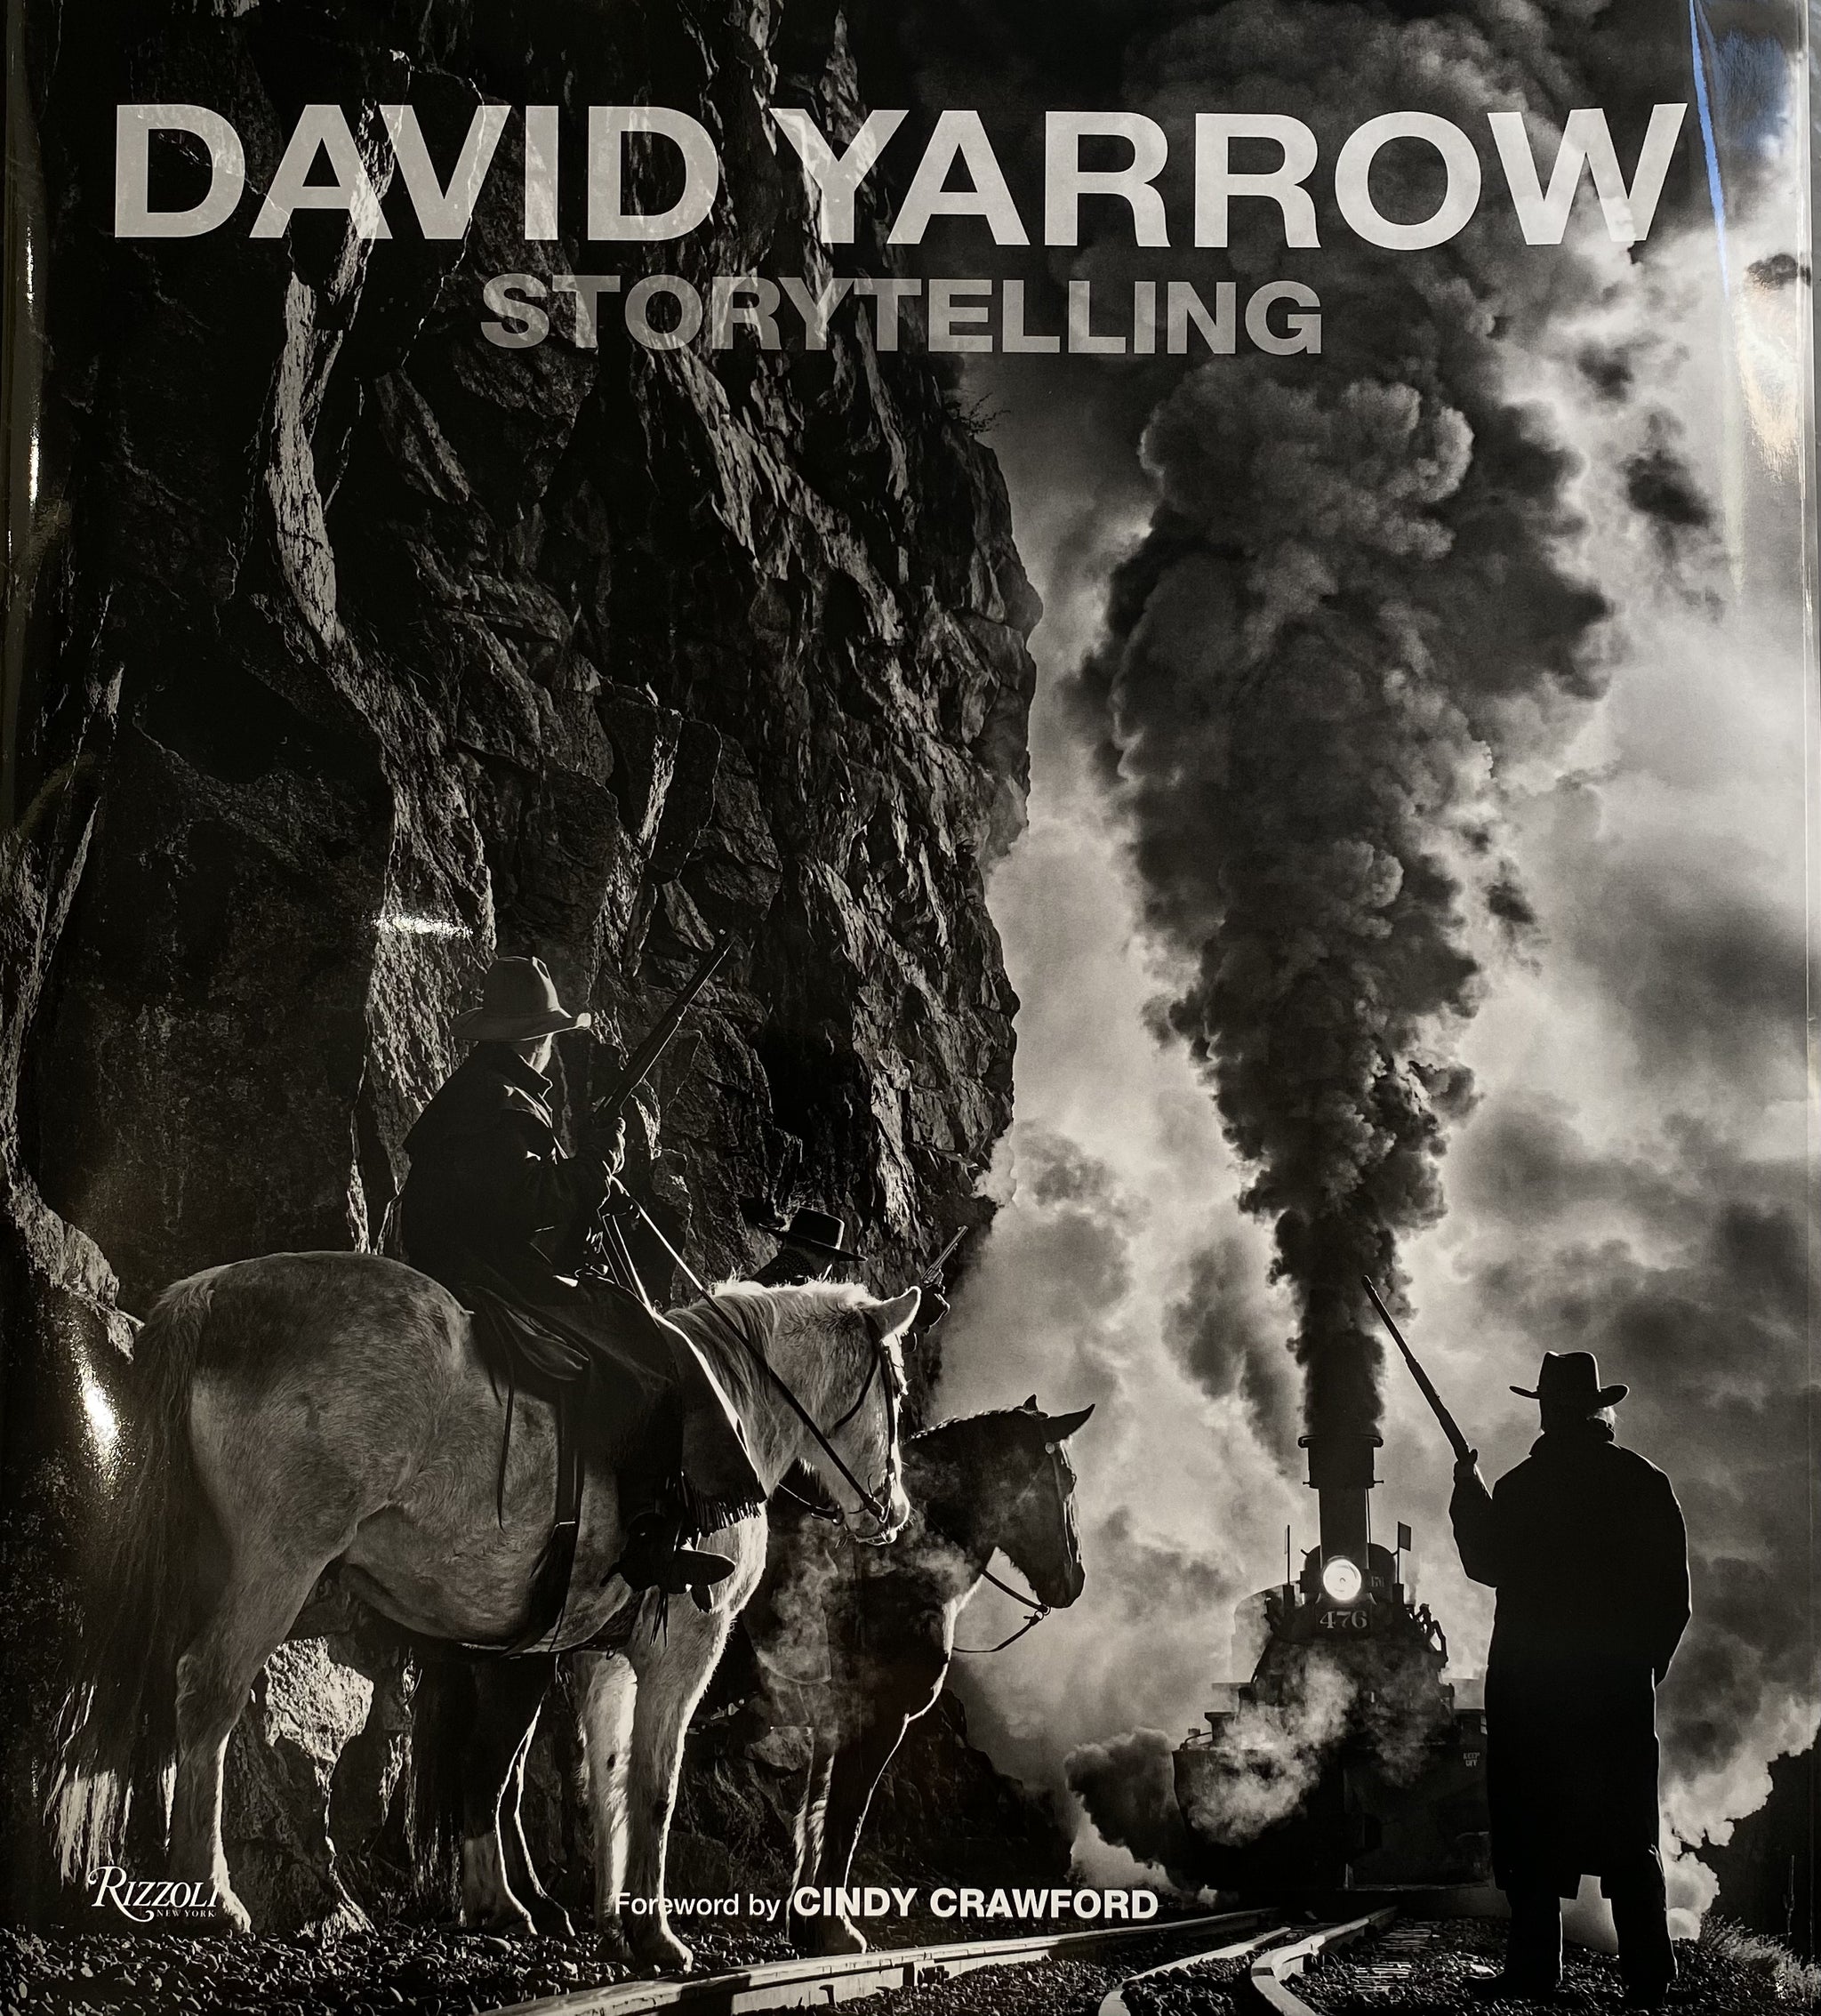  Book: Storytelling David Yarrow